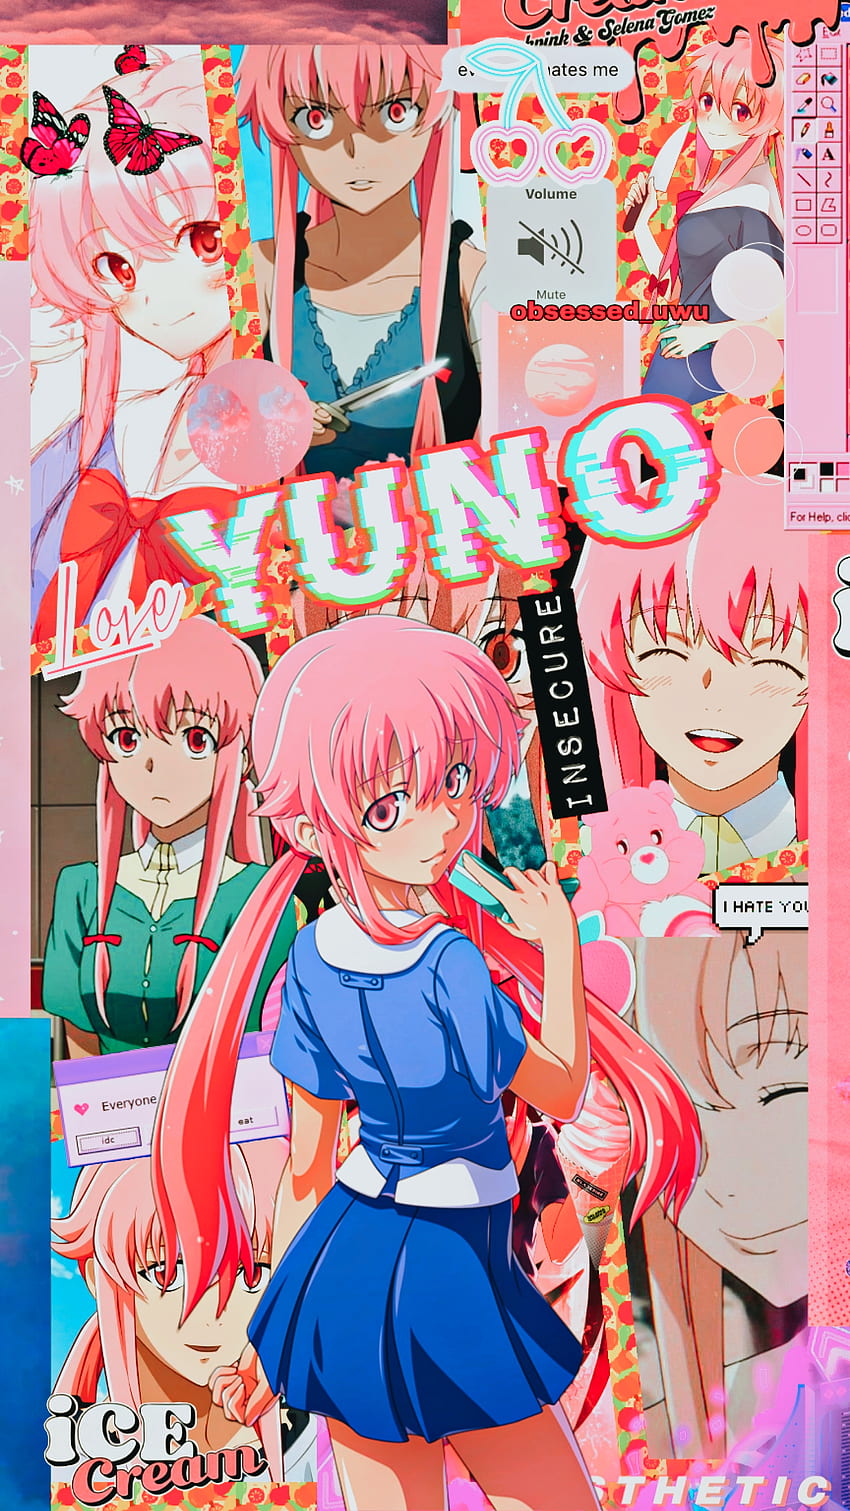 HD wallpaper: female anime character, Mirai Nikki, Gasai Yuno